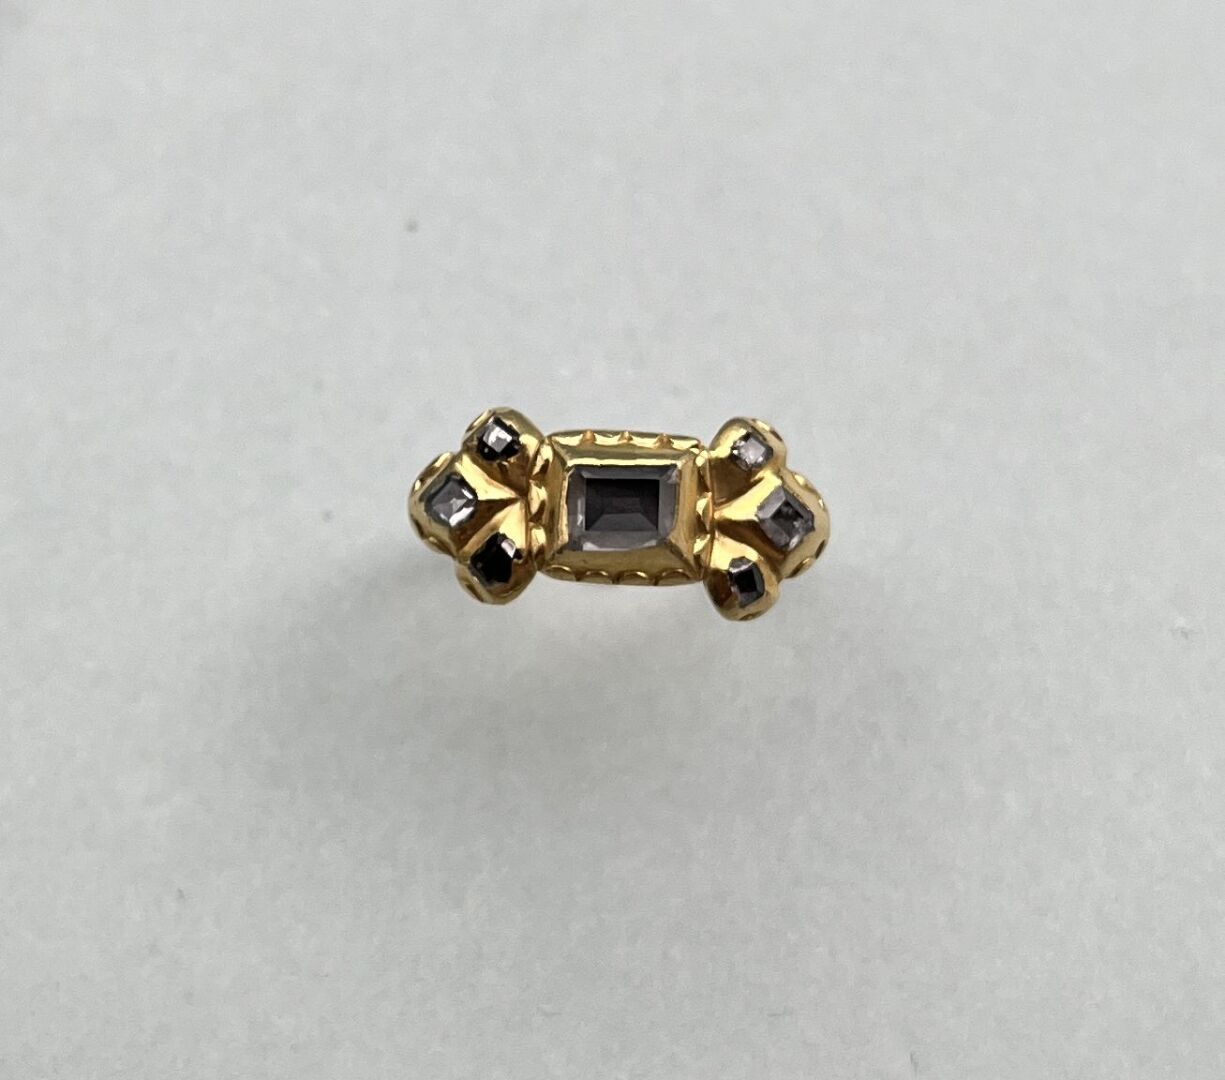 Null 黄金戒指（千分之七十五），凿有卷轴装饰，中心是一颗长方形的玫瑰式切割钻石，周围是较小的钻石，装在卵石上。

作品XIX°。

TDD : 53

毛重&hellip;